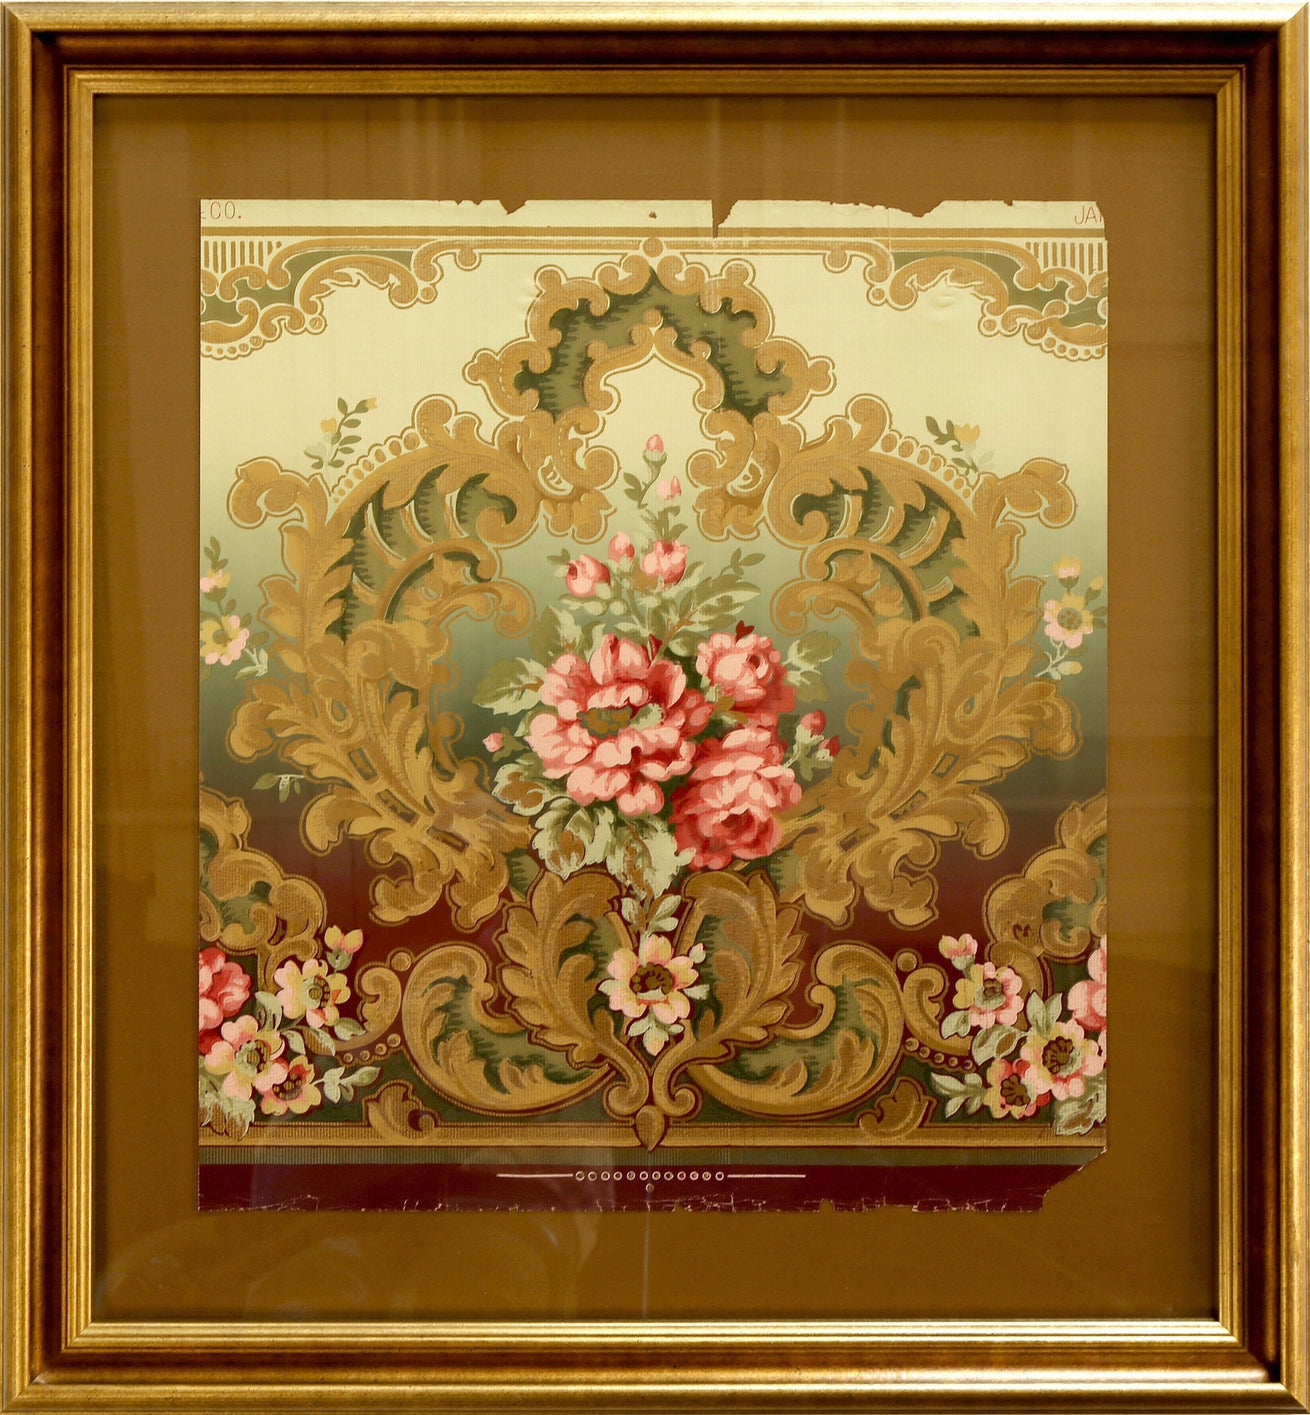 Embossed Gilt Rococo Floral Frieze - Framed Antique Wallpaper Art